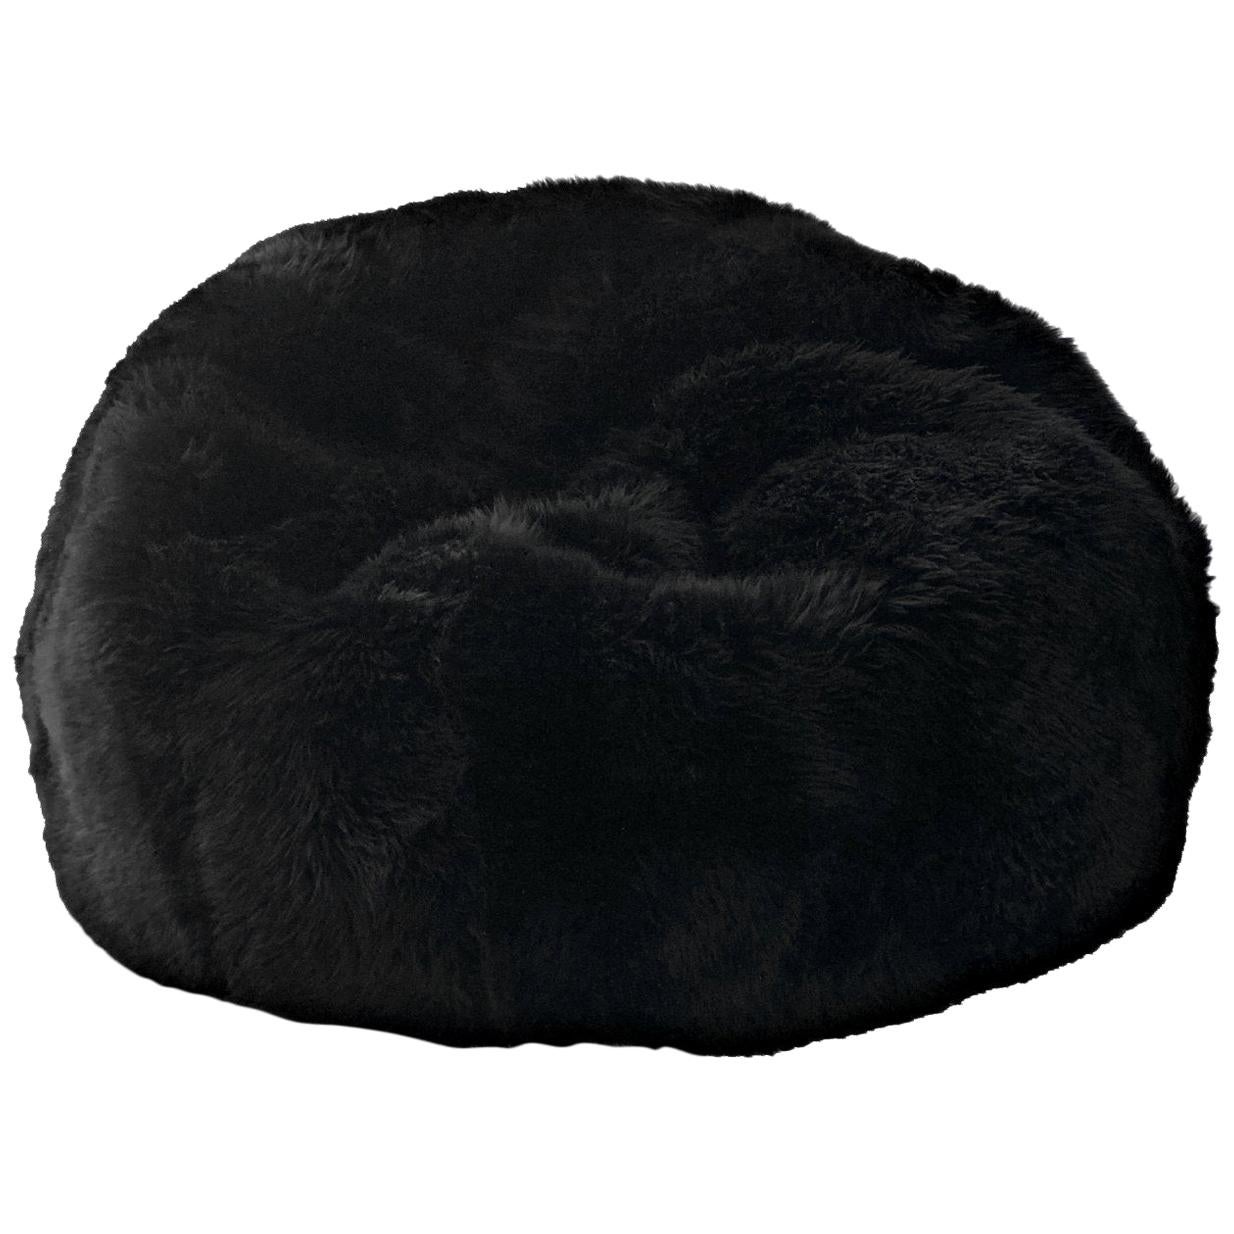 Black Large Sheepskin Bean Bag Cover, Merino Sheepskin, Made in Australia